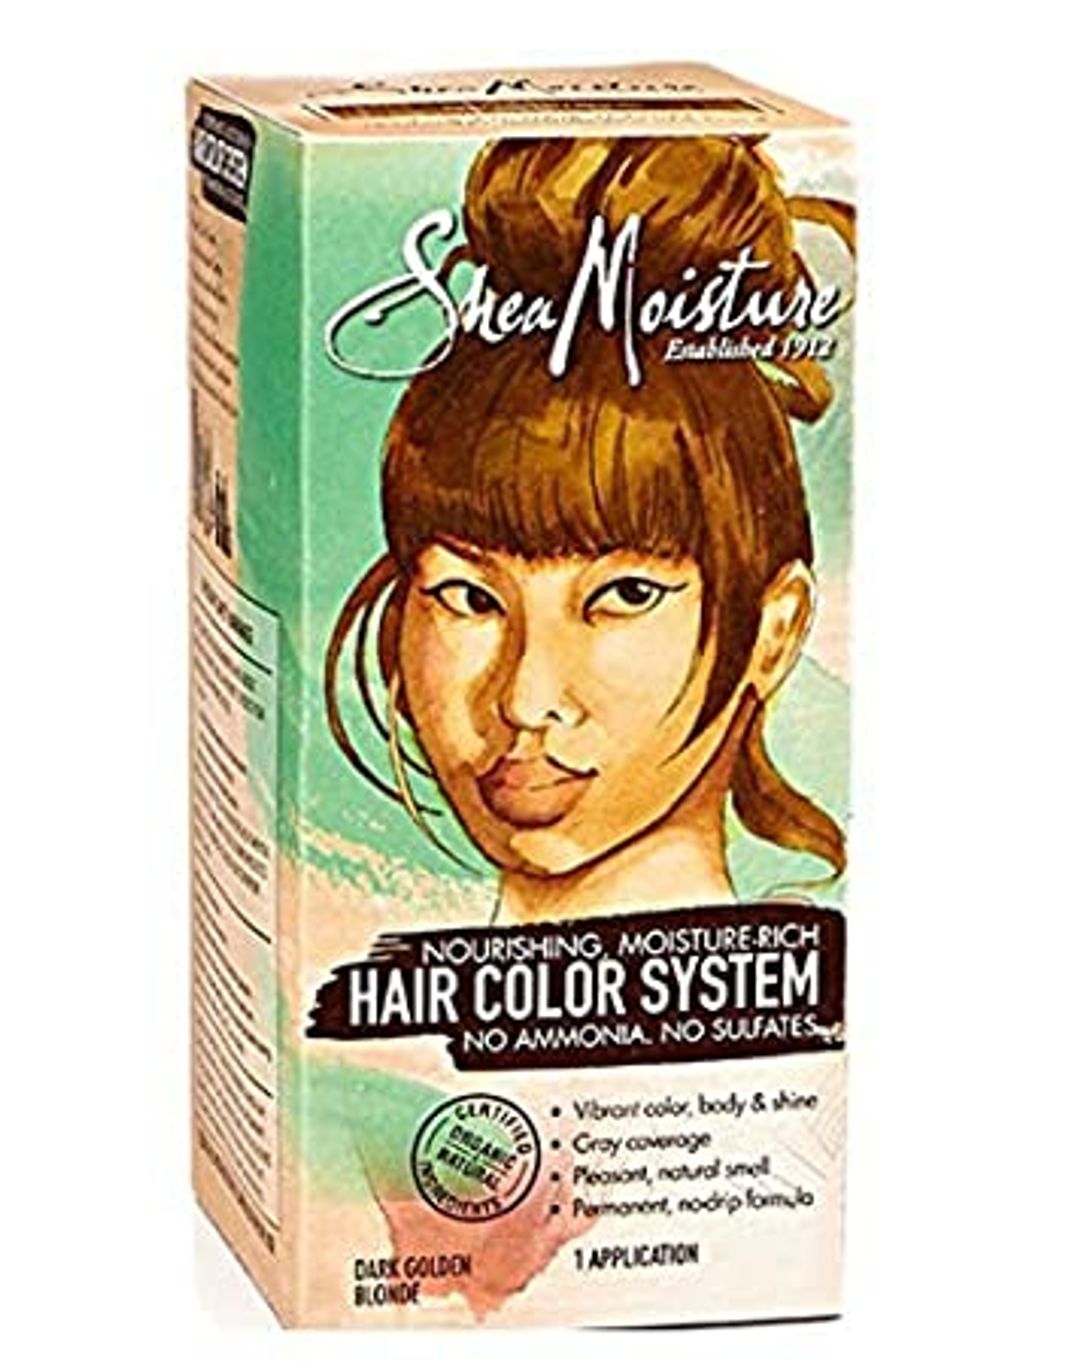 Shea Moisture Hair Color System - Medium Chesnut Brown